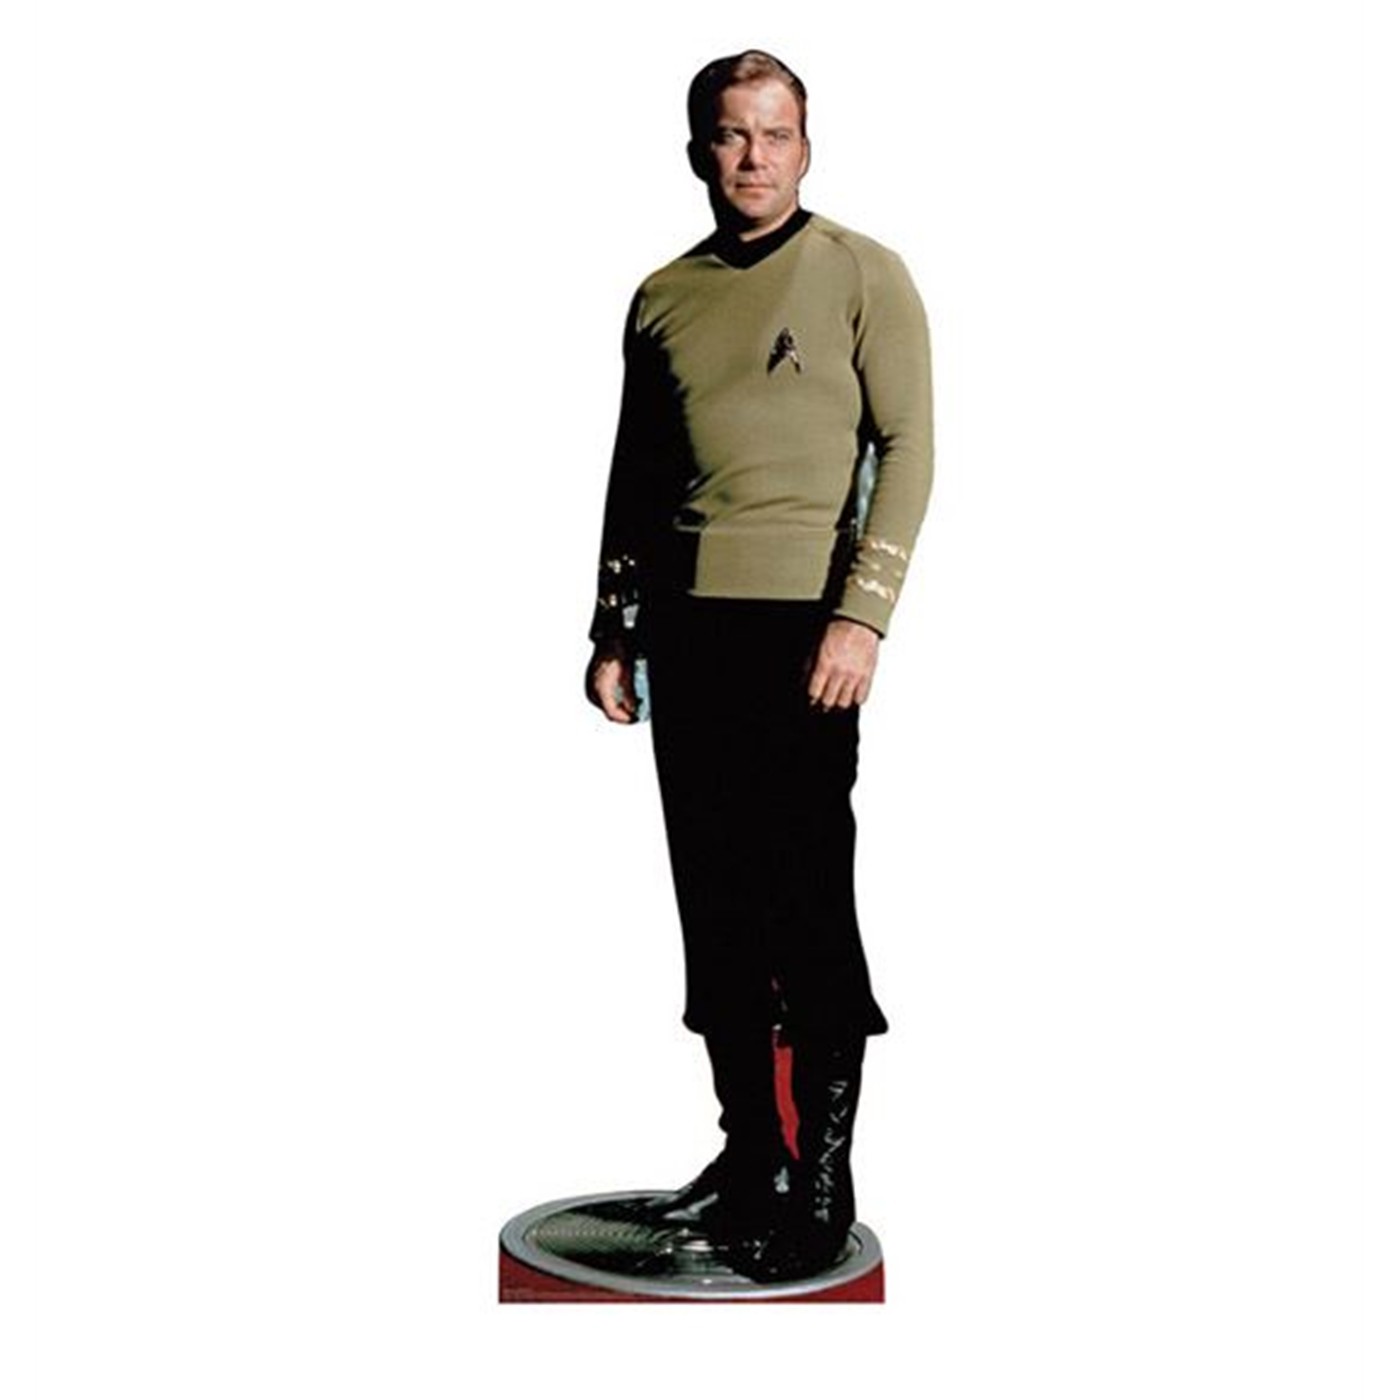 Star Trek: The Original Series Captain Kirk Cardboard Cutout Standee